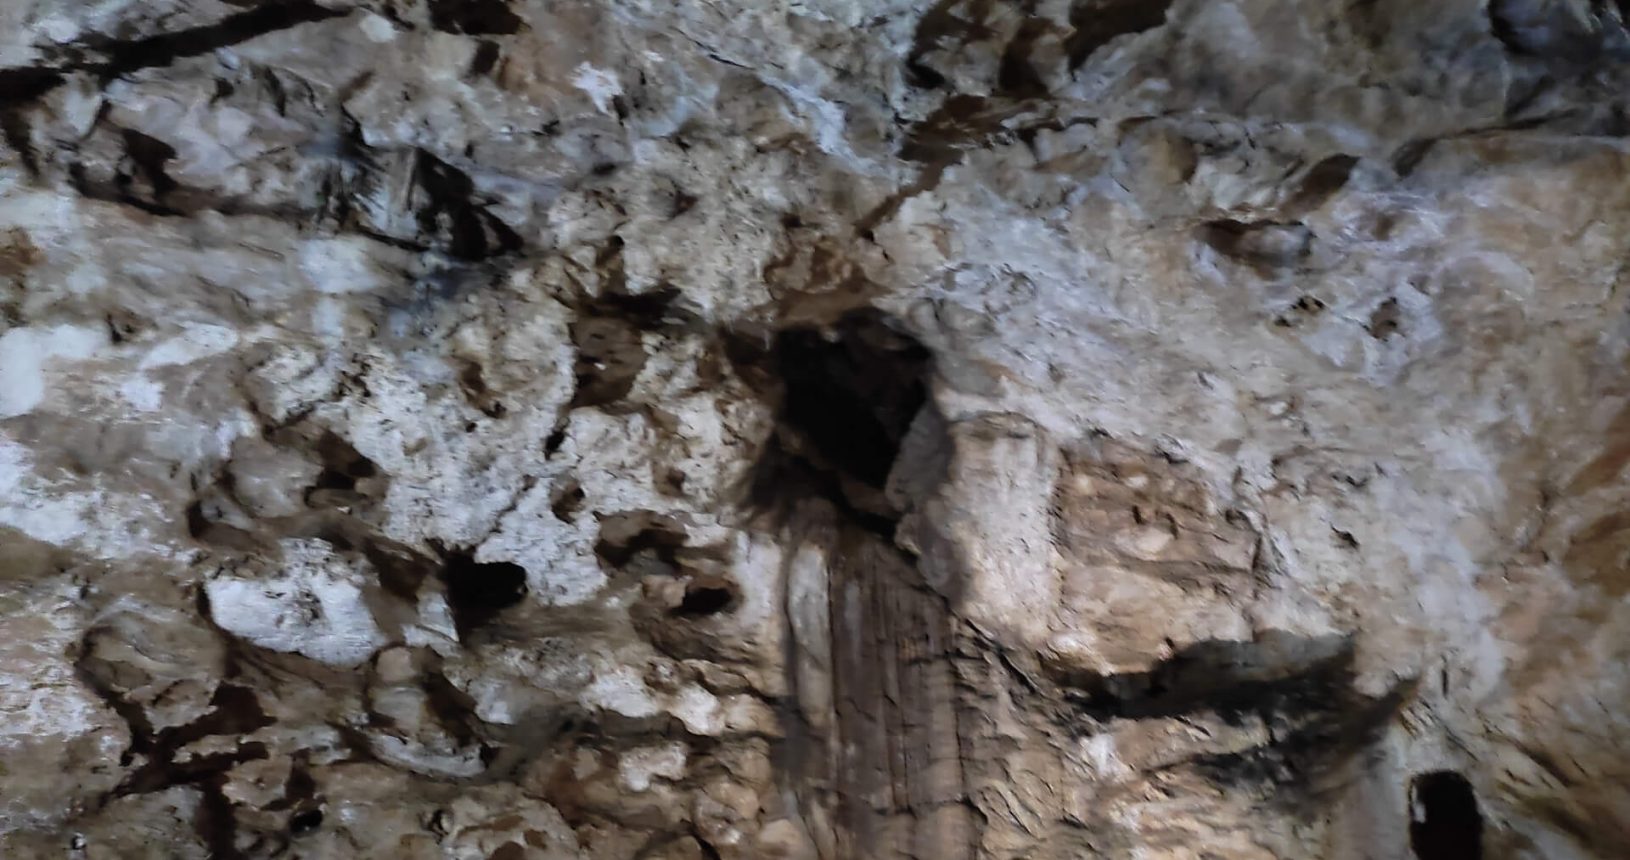 Lipa Cave and its holes